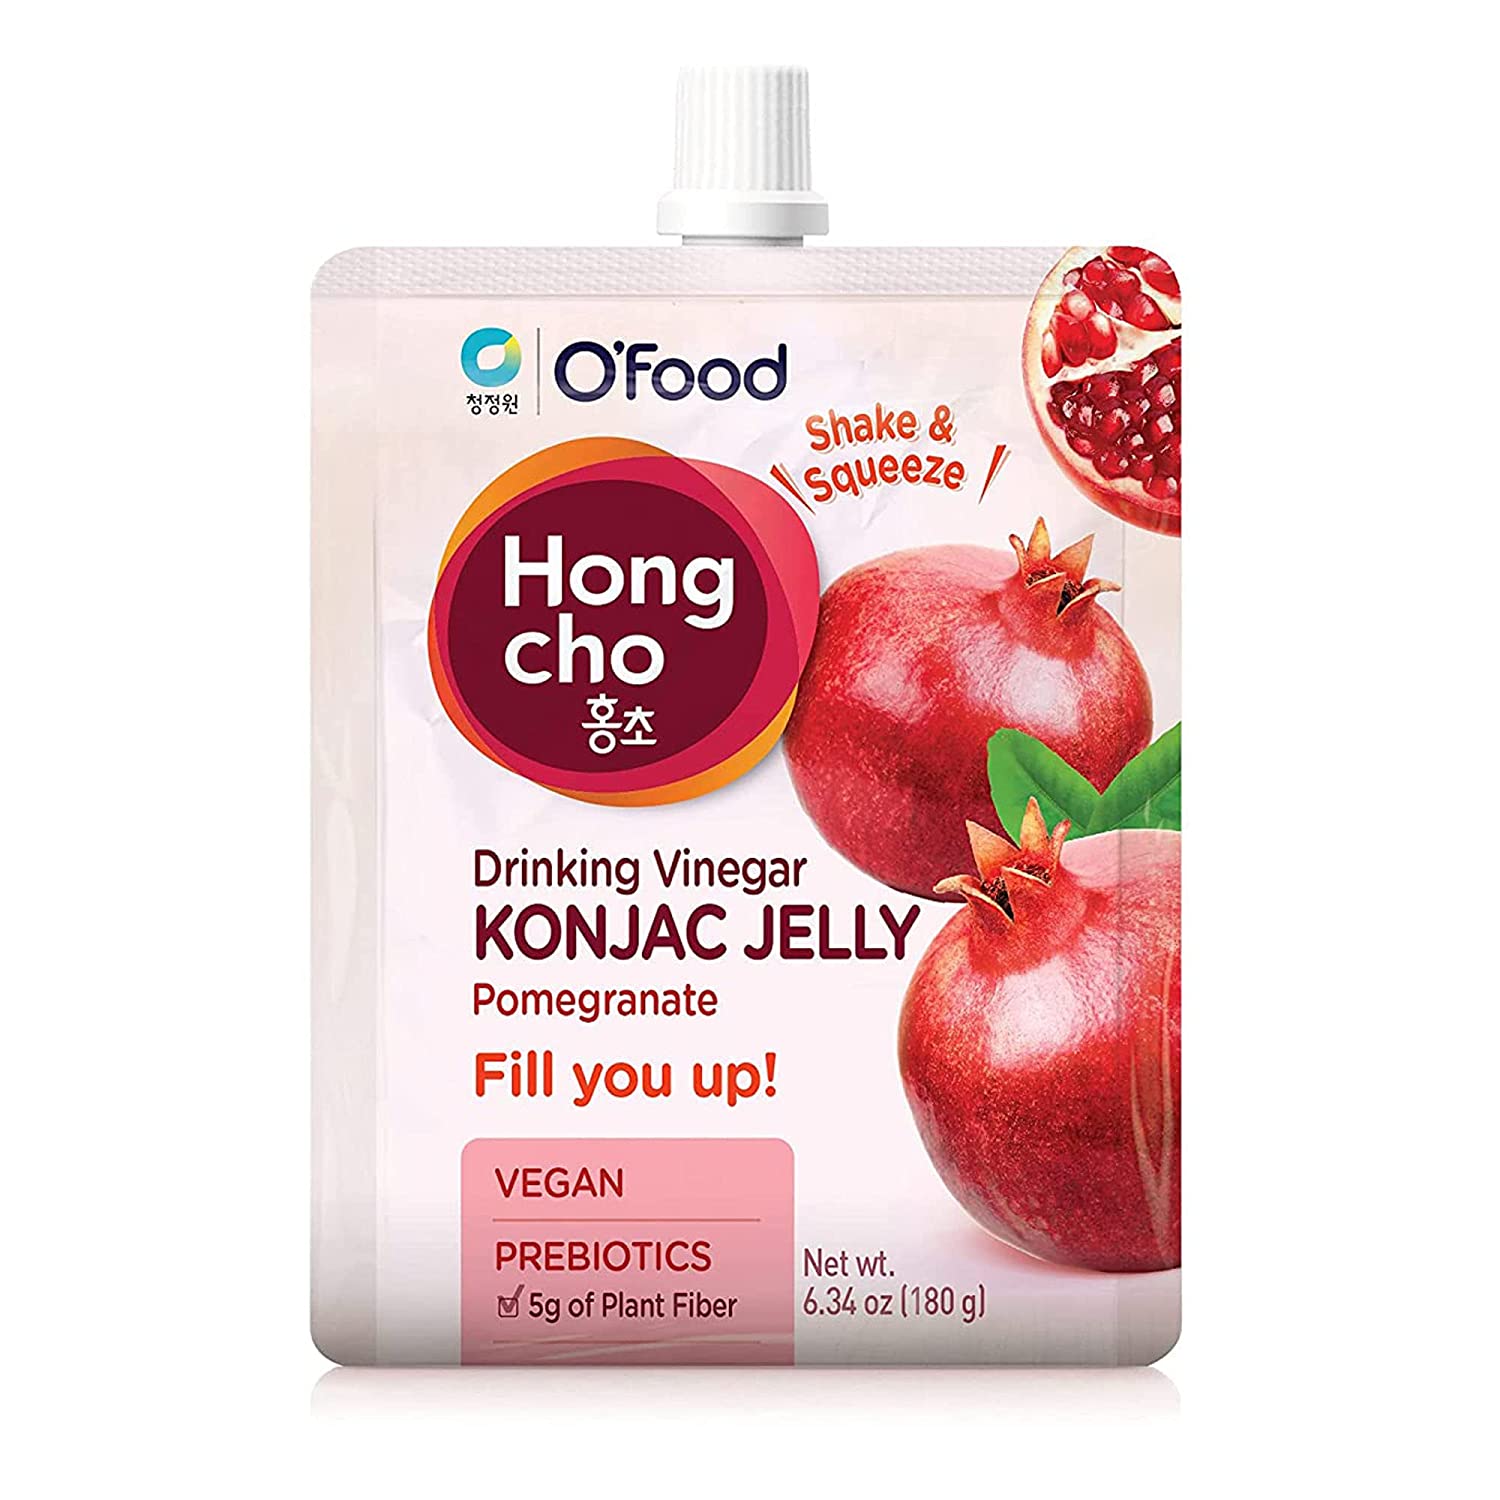 Pomegranate Konjac Jelly (Pack of 5) 석류맛 곤약젤리